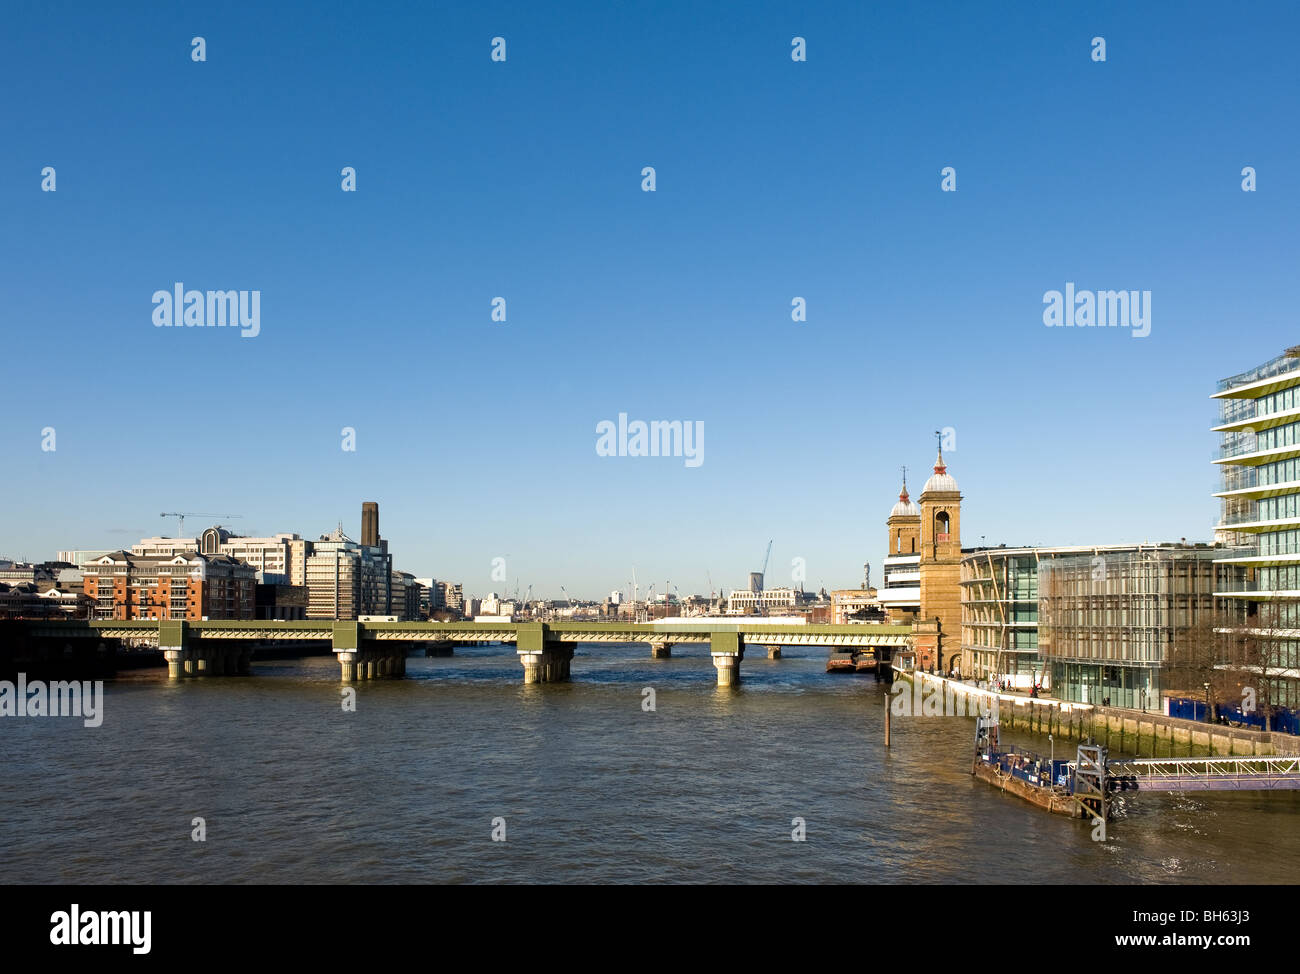 Cannon Street Railway Bridge across the River Thames. Stock Photo